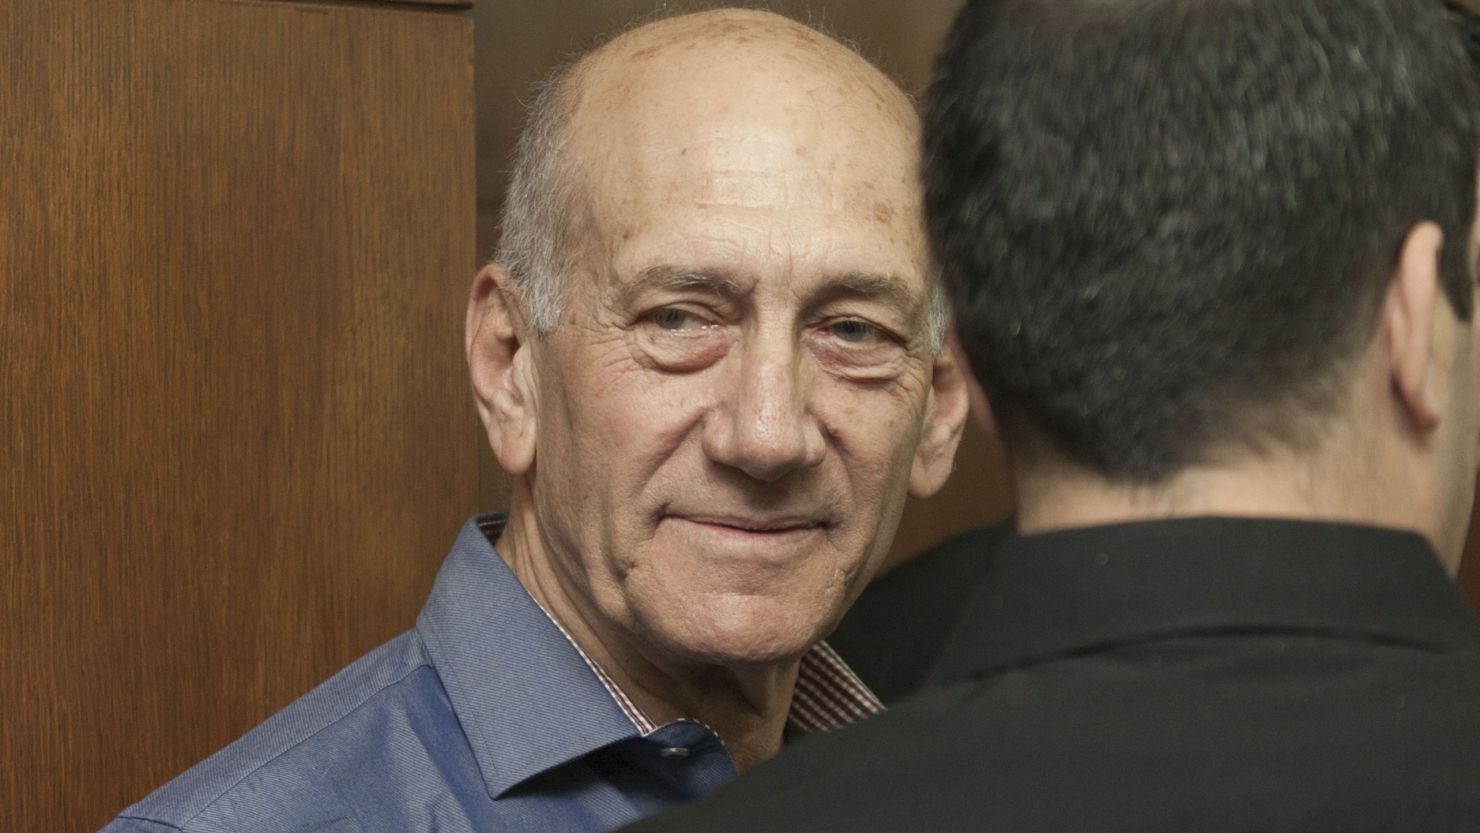 Former Israeli Prime Minister Ehud Olmert attends a hearing at Tel Aviv's District Court on Monday.